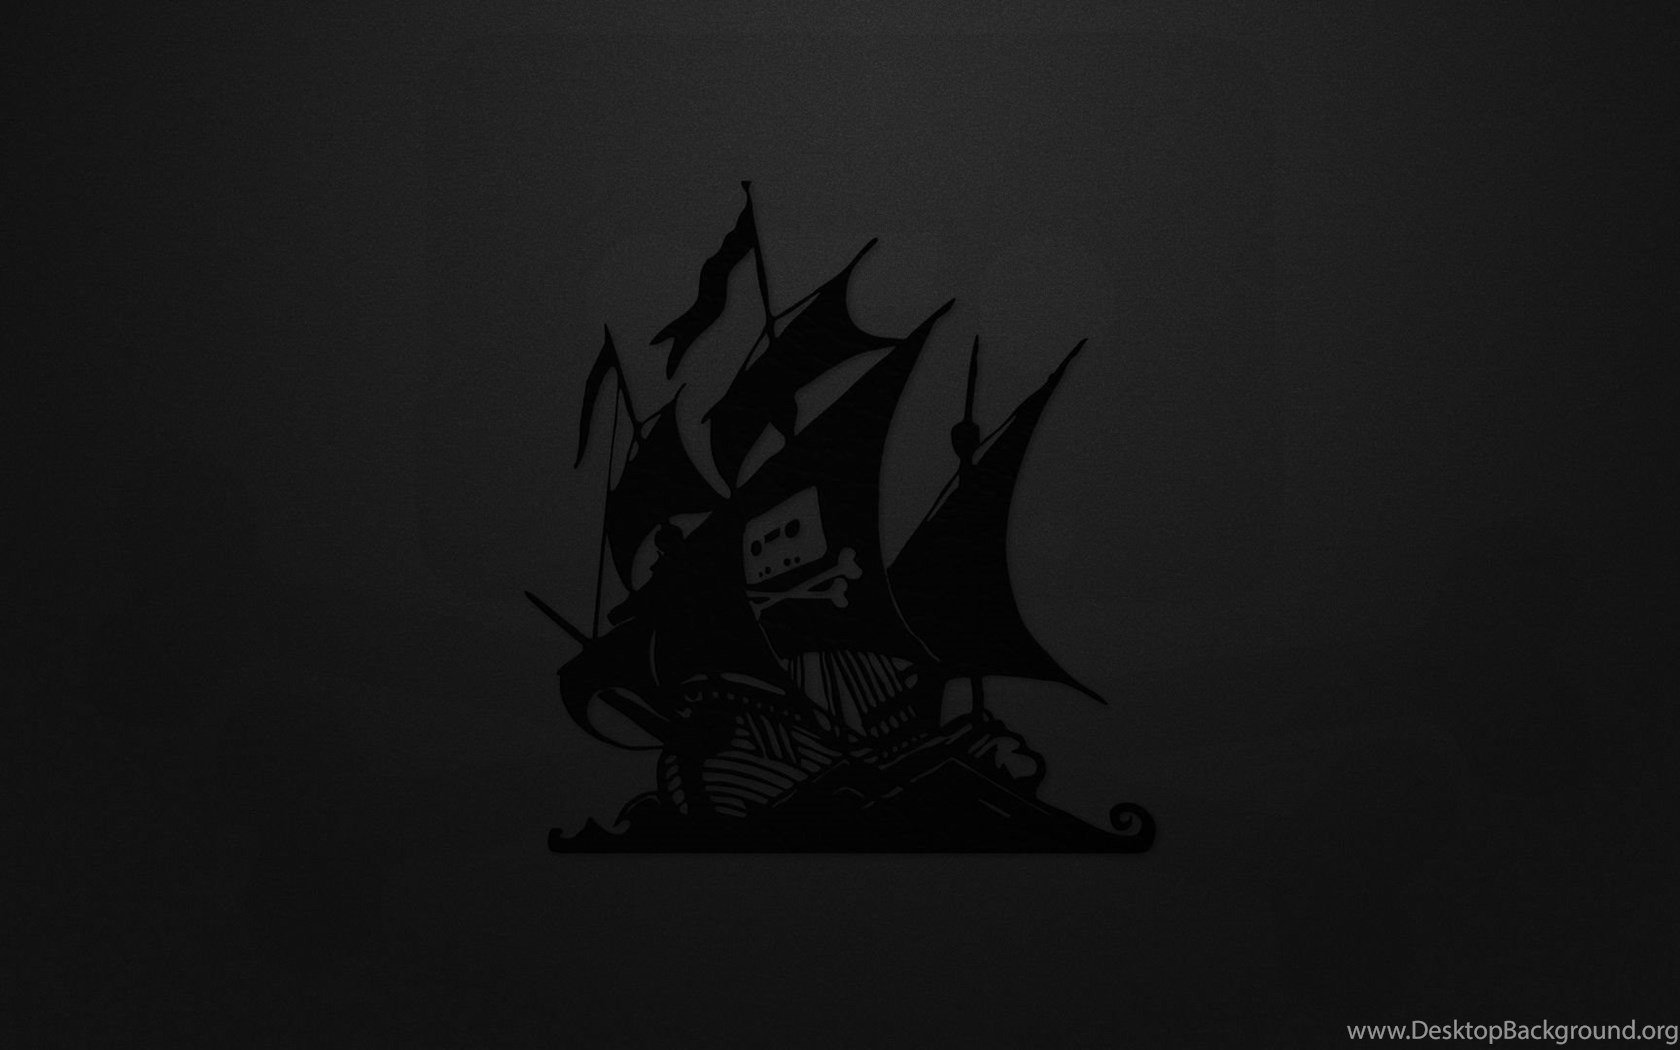 The Pirate Bay Wallpaper. [1920x1080], Wallpaper Desktop Background